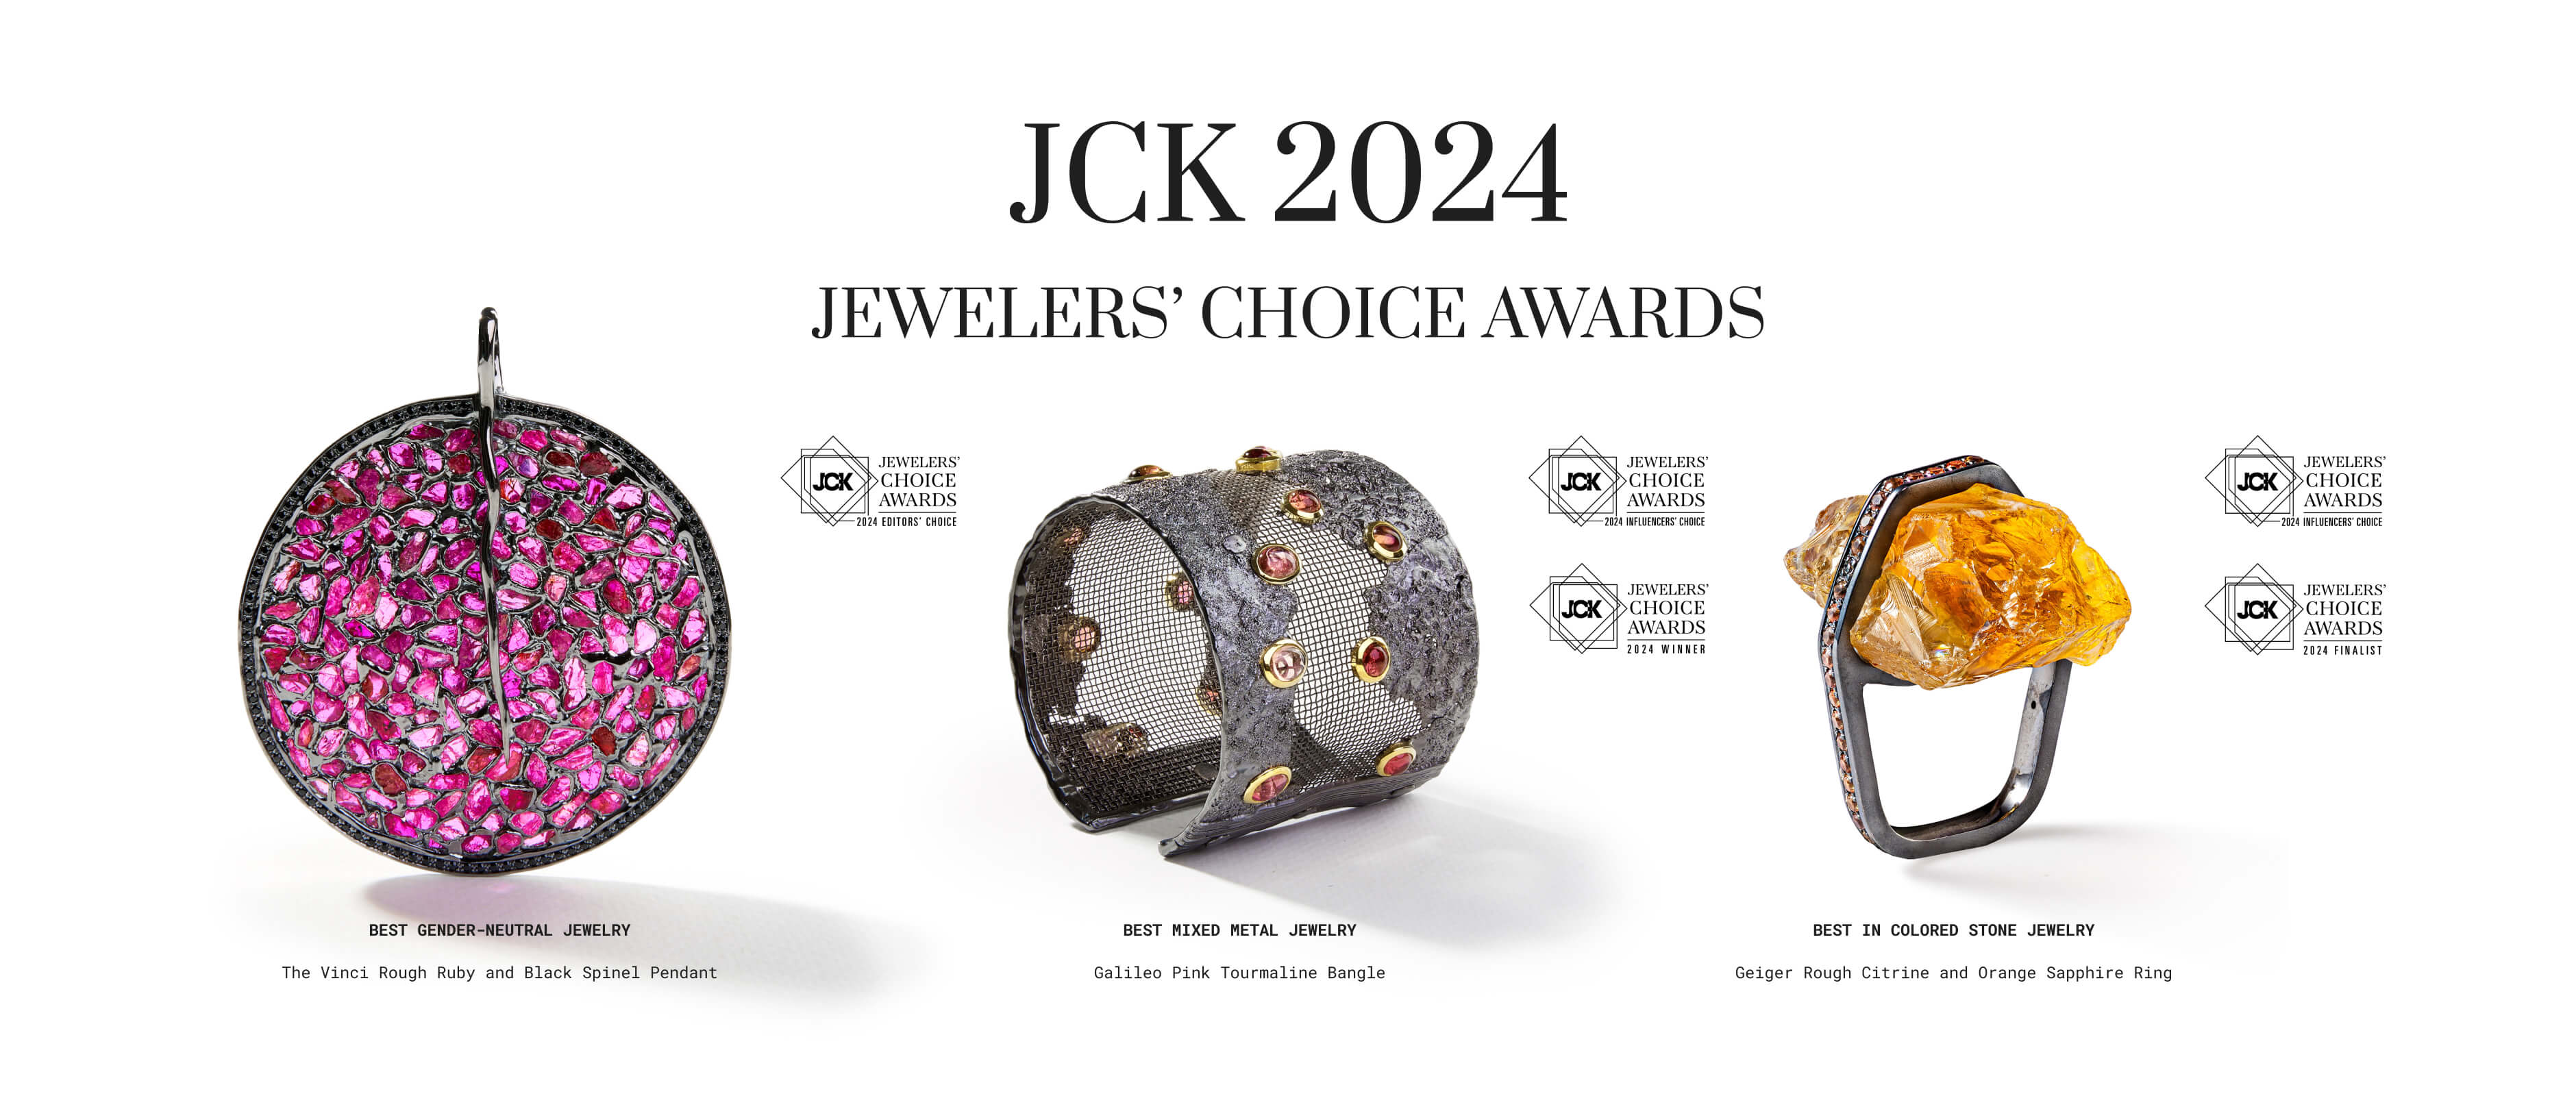 JCK awards